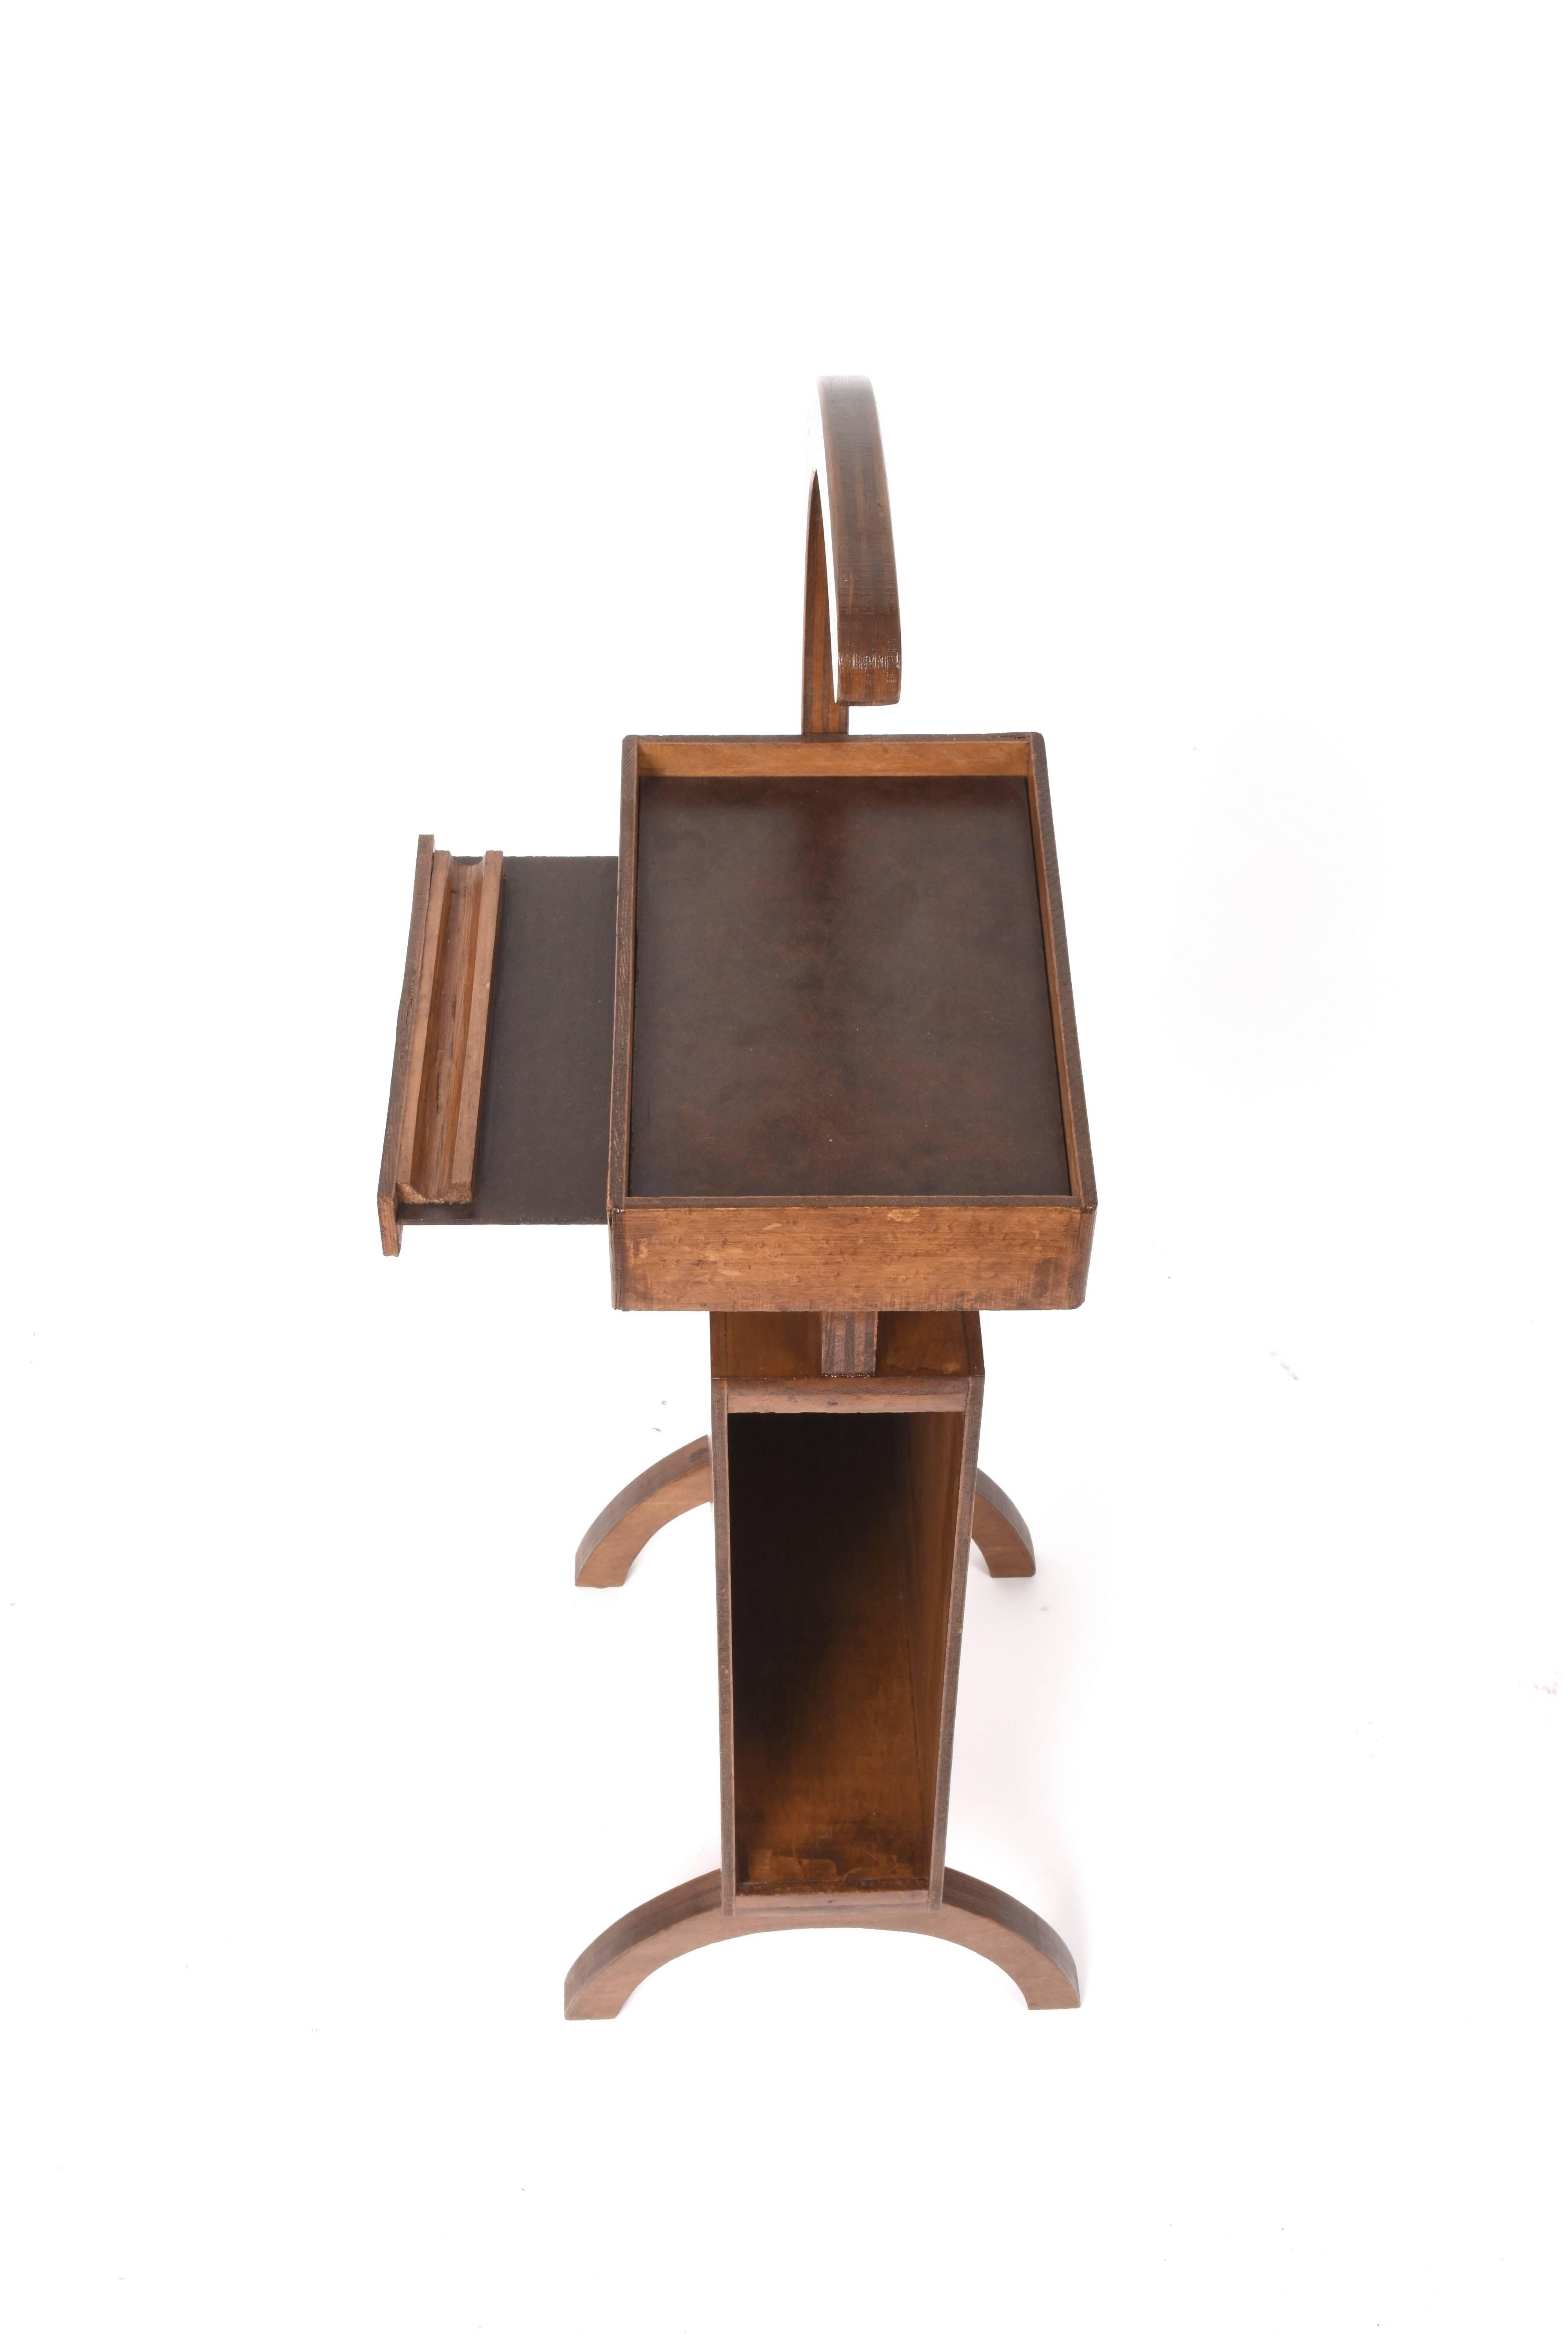 Italian Smoke Table or Telephone. in Wood and Mdf Medium-Density Fibreboard, Italy 1960s